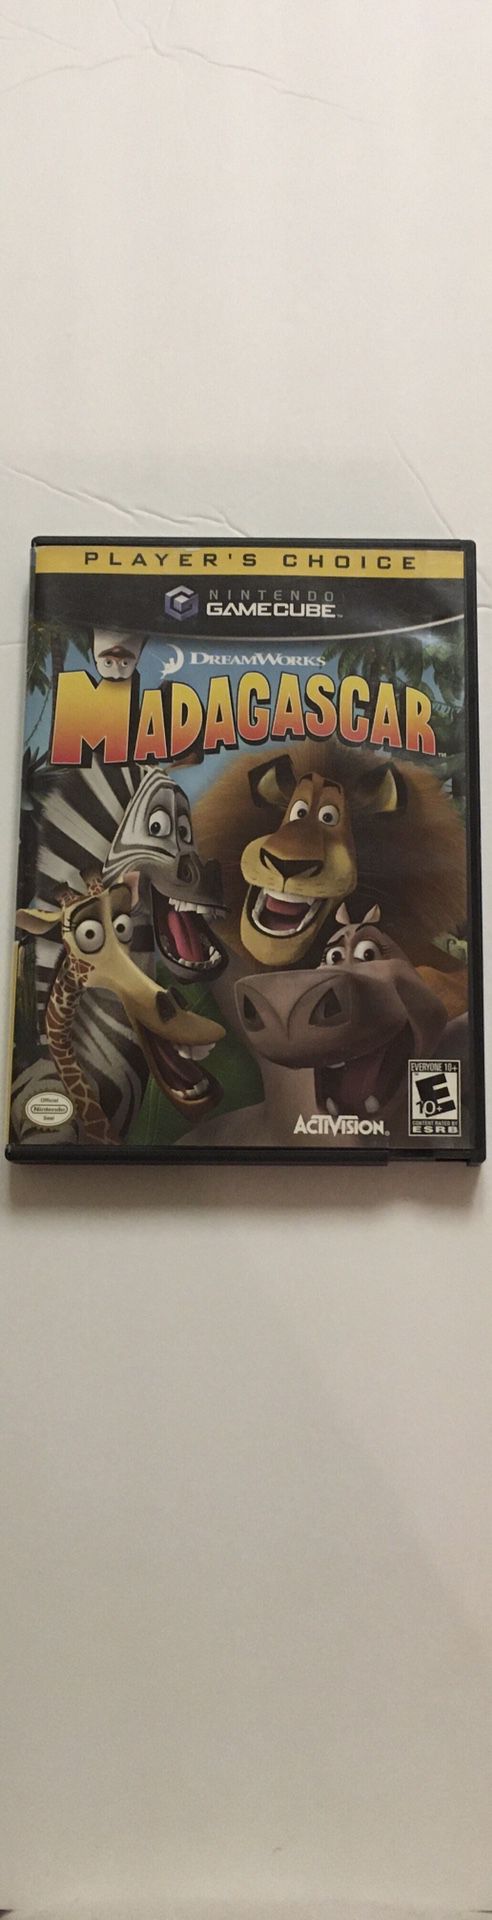 Nintendo GameCube DreamWorks MADAGASCAR